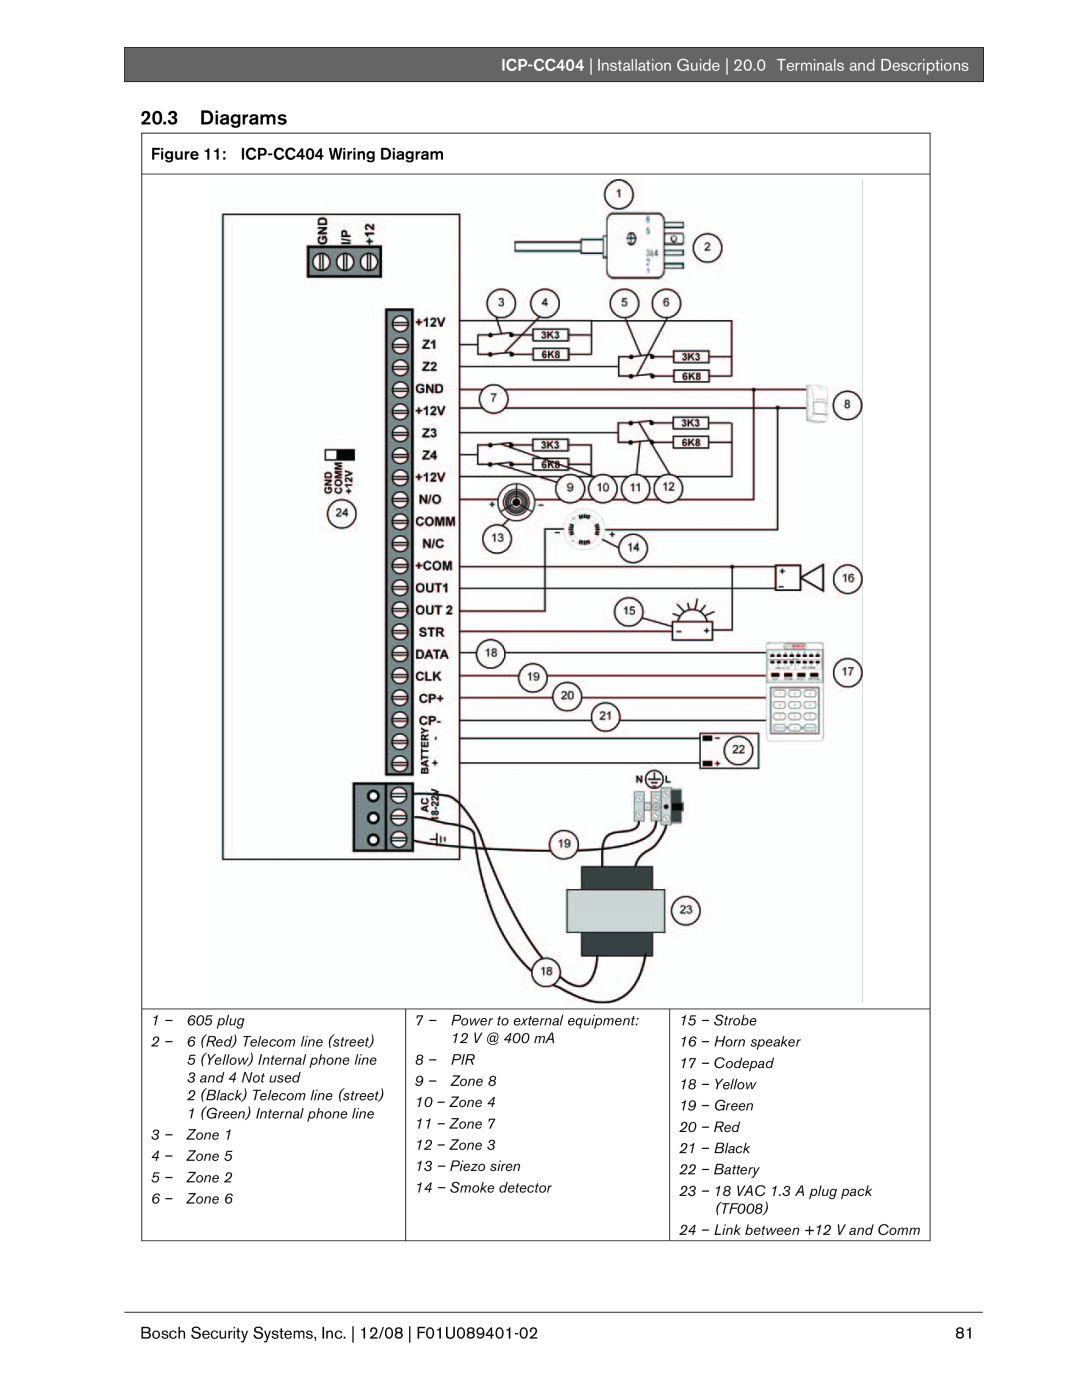 Bosch Appliances manual 20.3Diagrams, ICP-CC404Wiring Diagram 